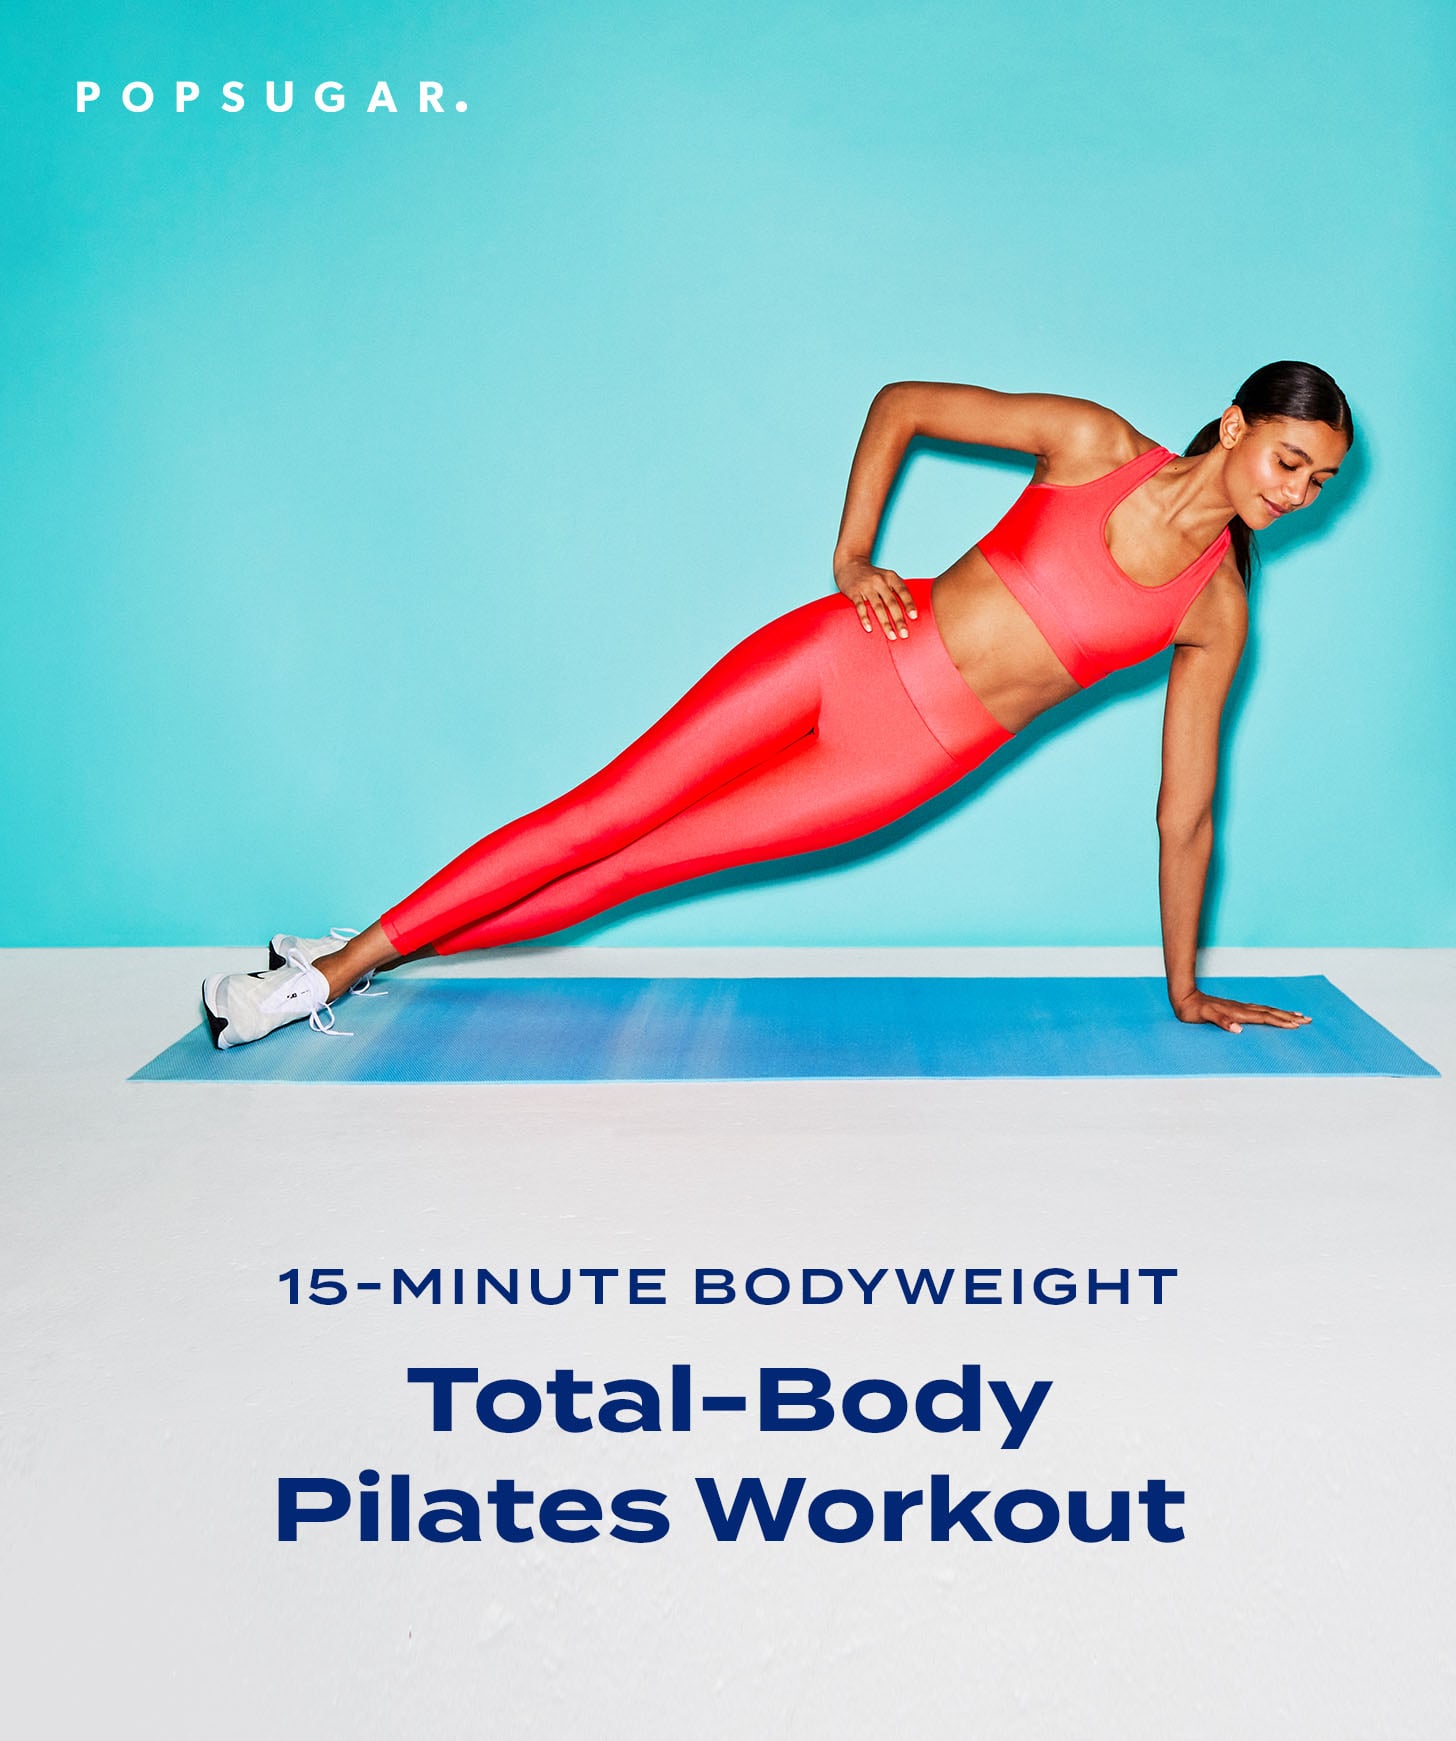 Total-Body Pilates Workout